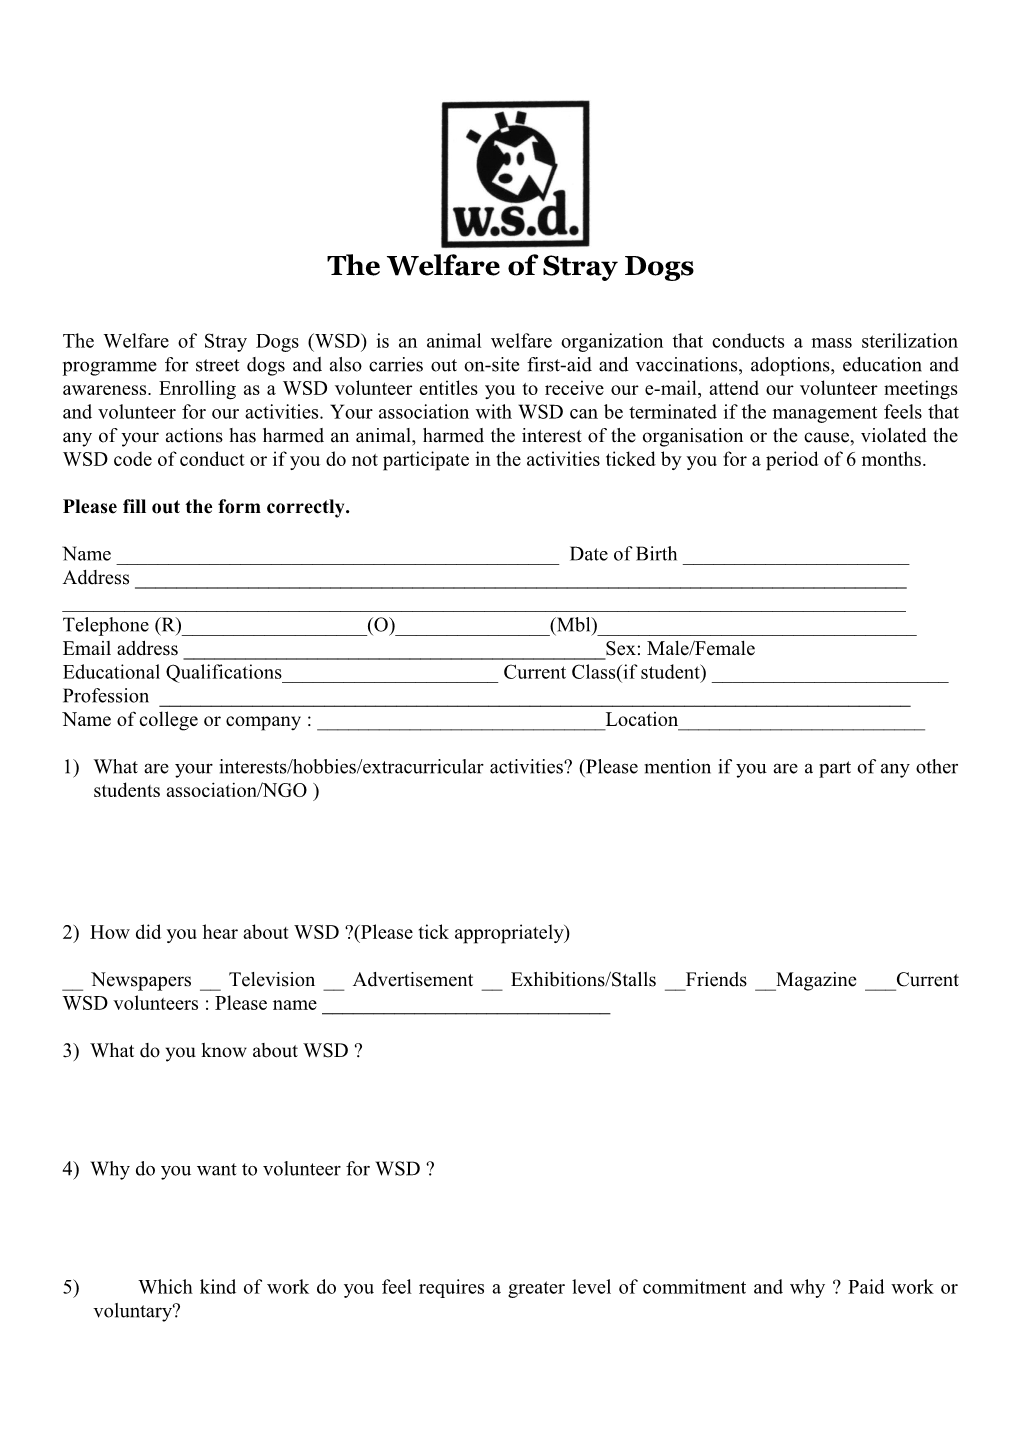 The WSD Volunteer Management Program